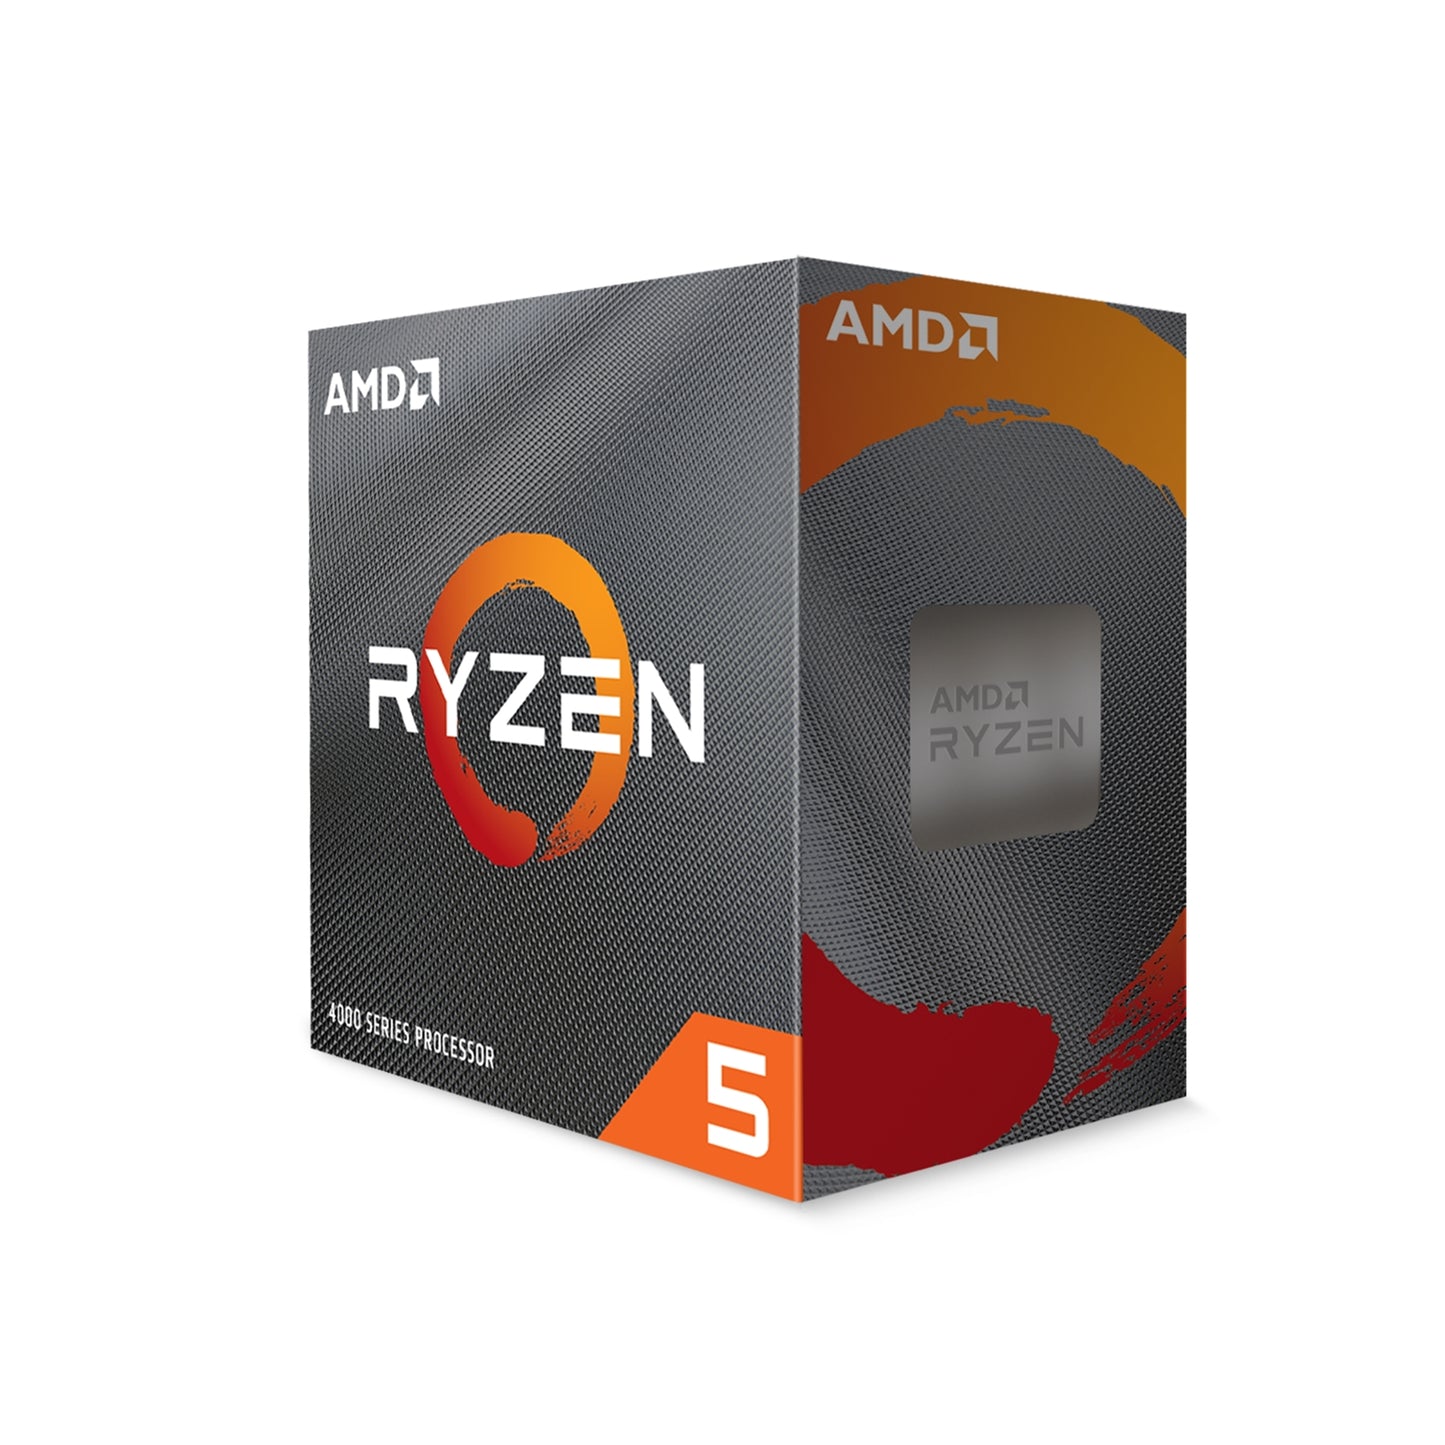 AMD Ryzen 5 4600G 3.7GHz 6 Core AM4 Processor, 12 Threads, 4.2GHz Boost, Radeon Graphics